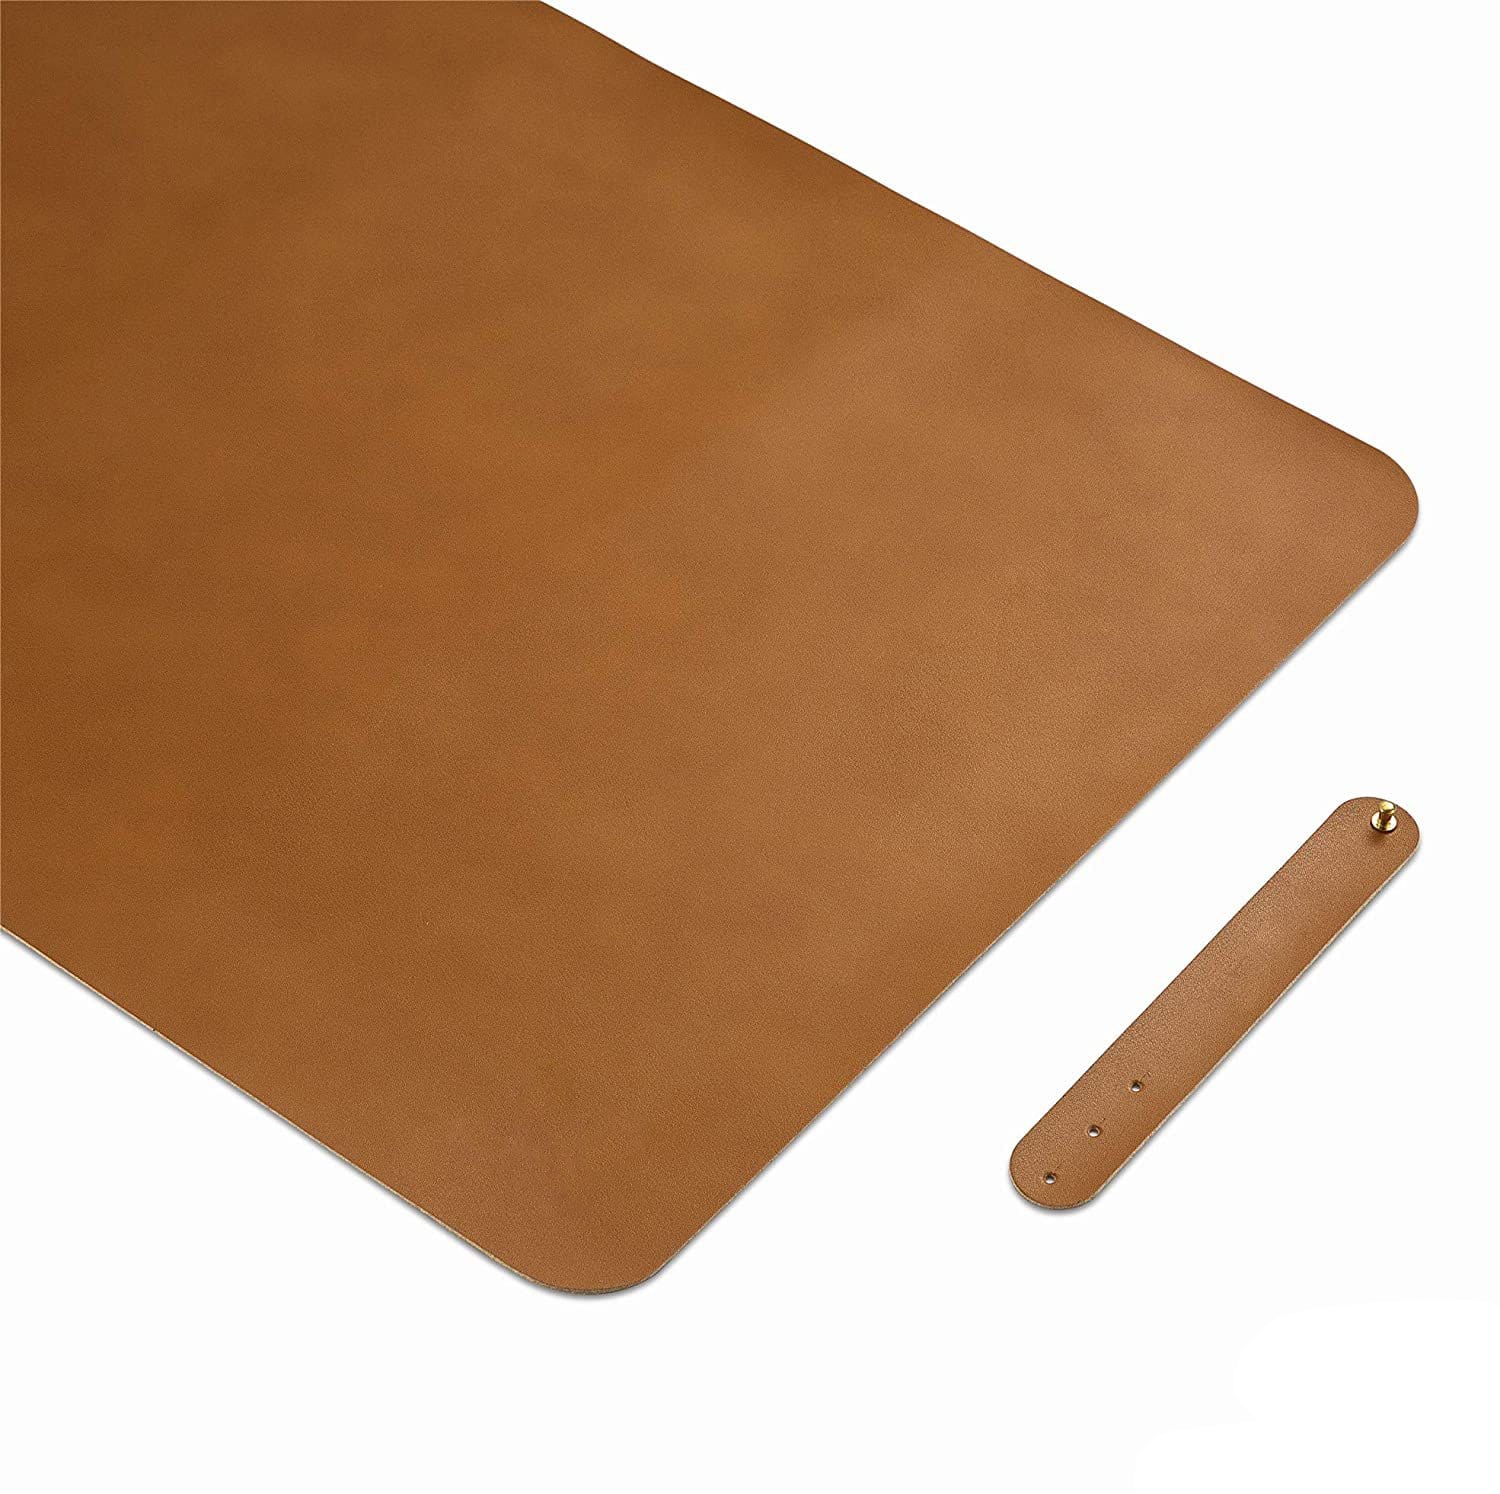 kinnoti Vegan Leather Tan Desk-mat